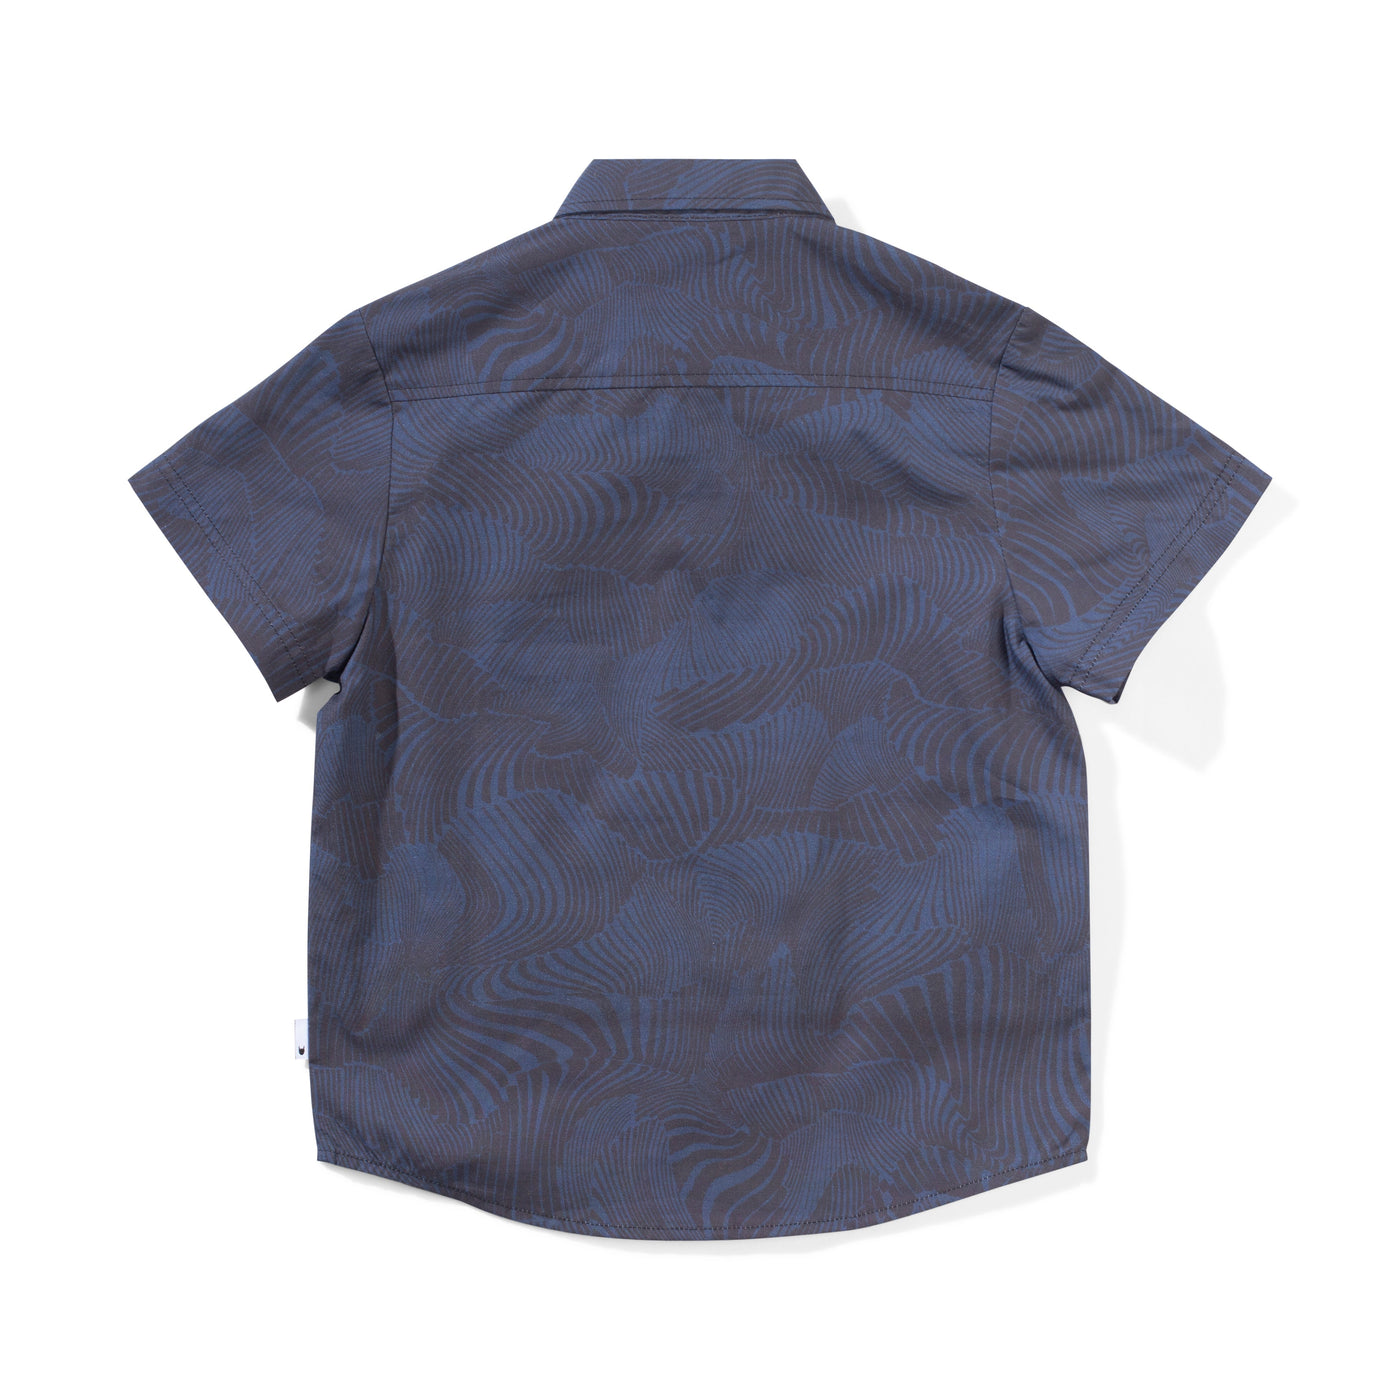 Swirl Shirt - Dk Denim Short Sleeve Shirt Munster 